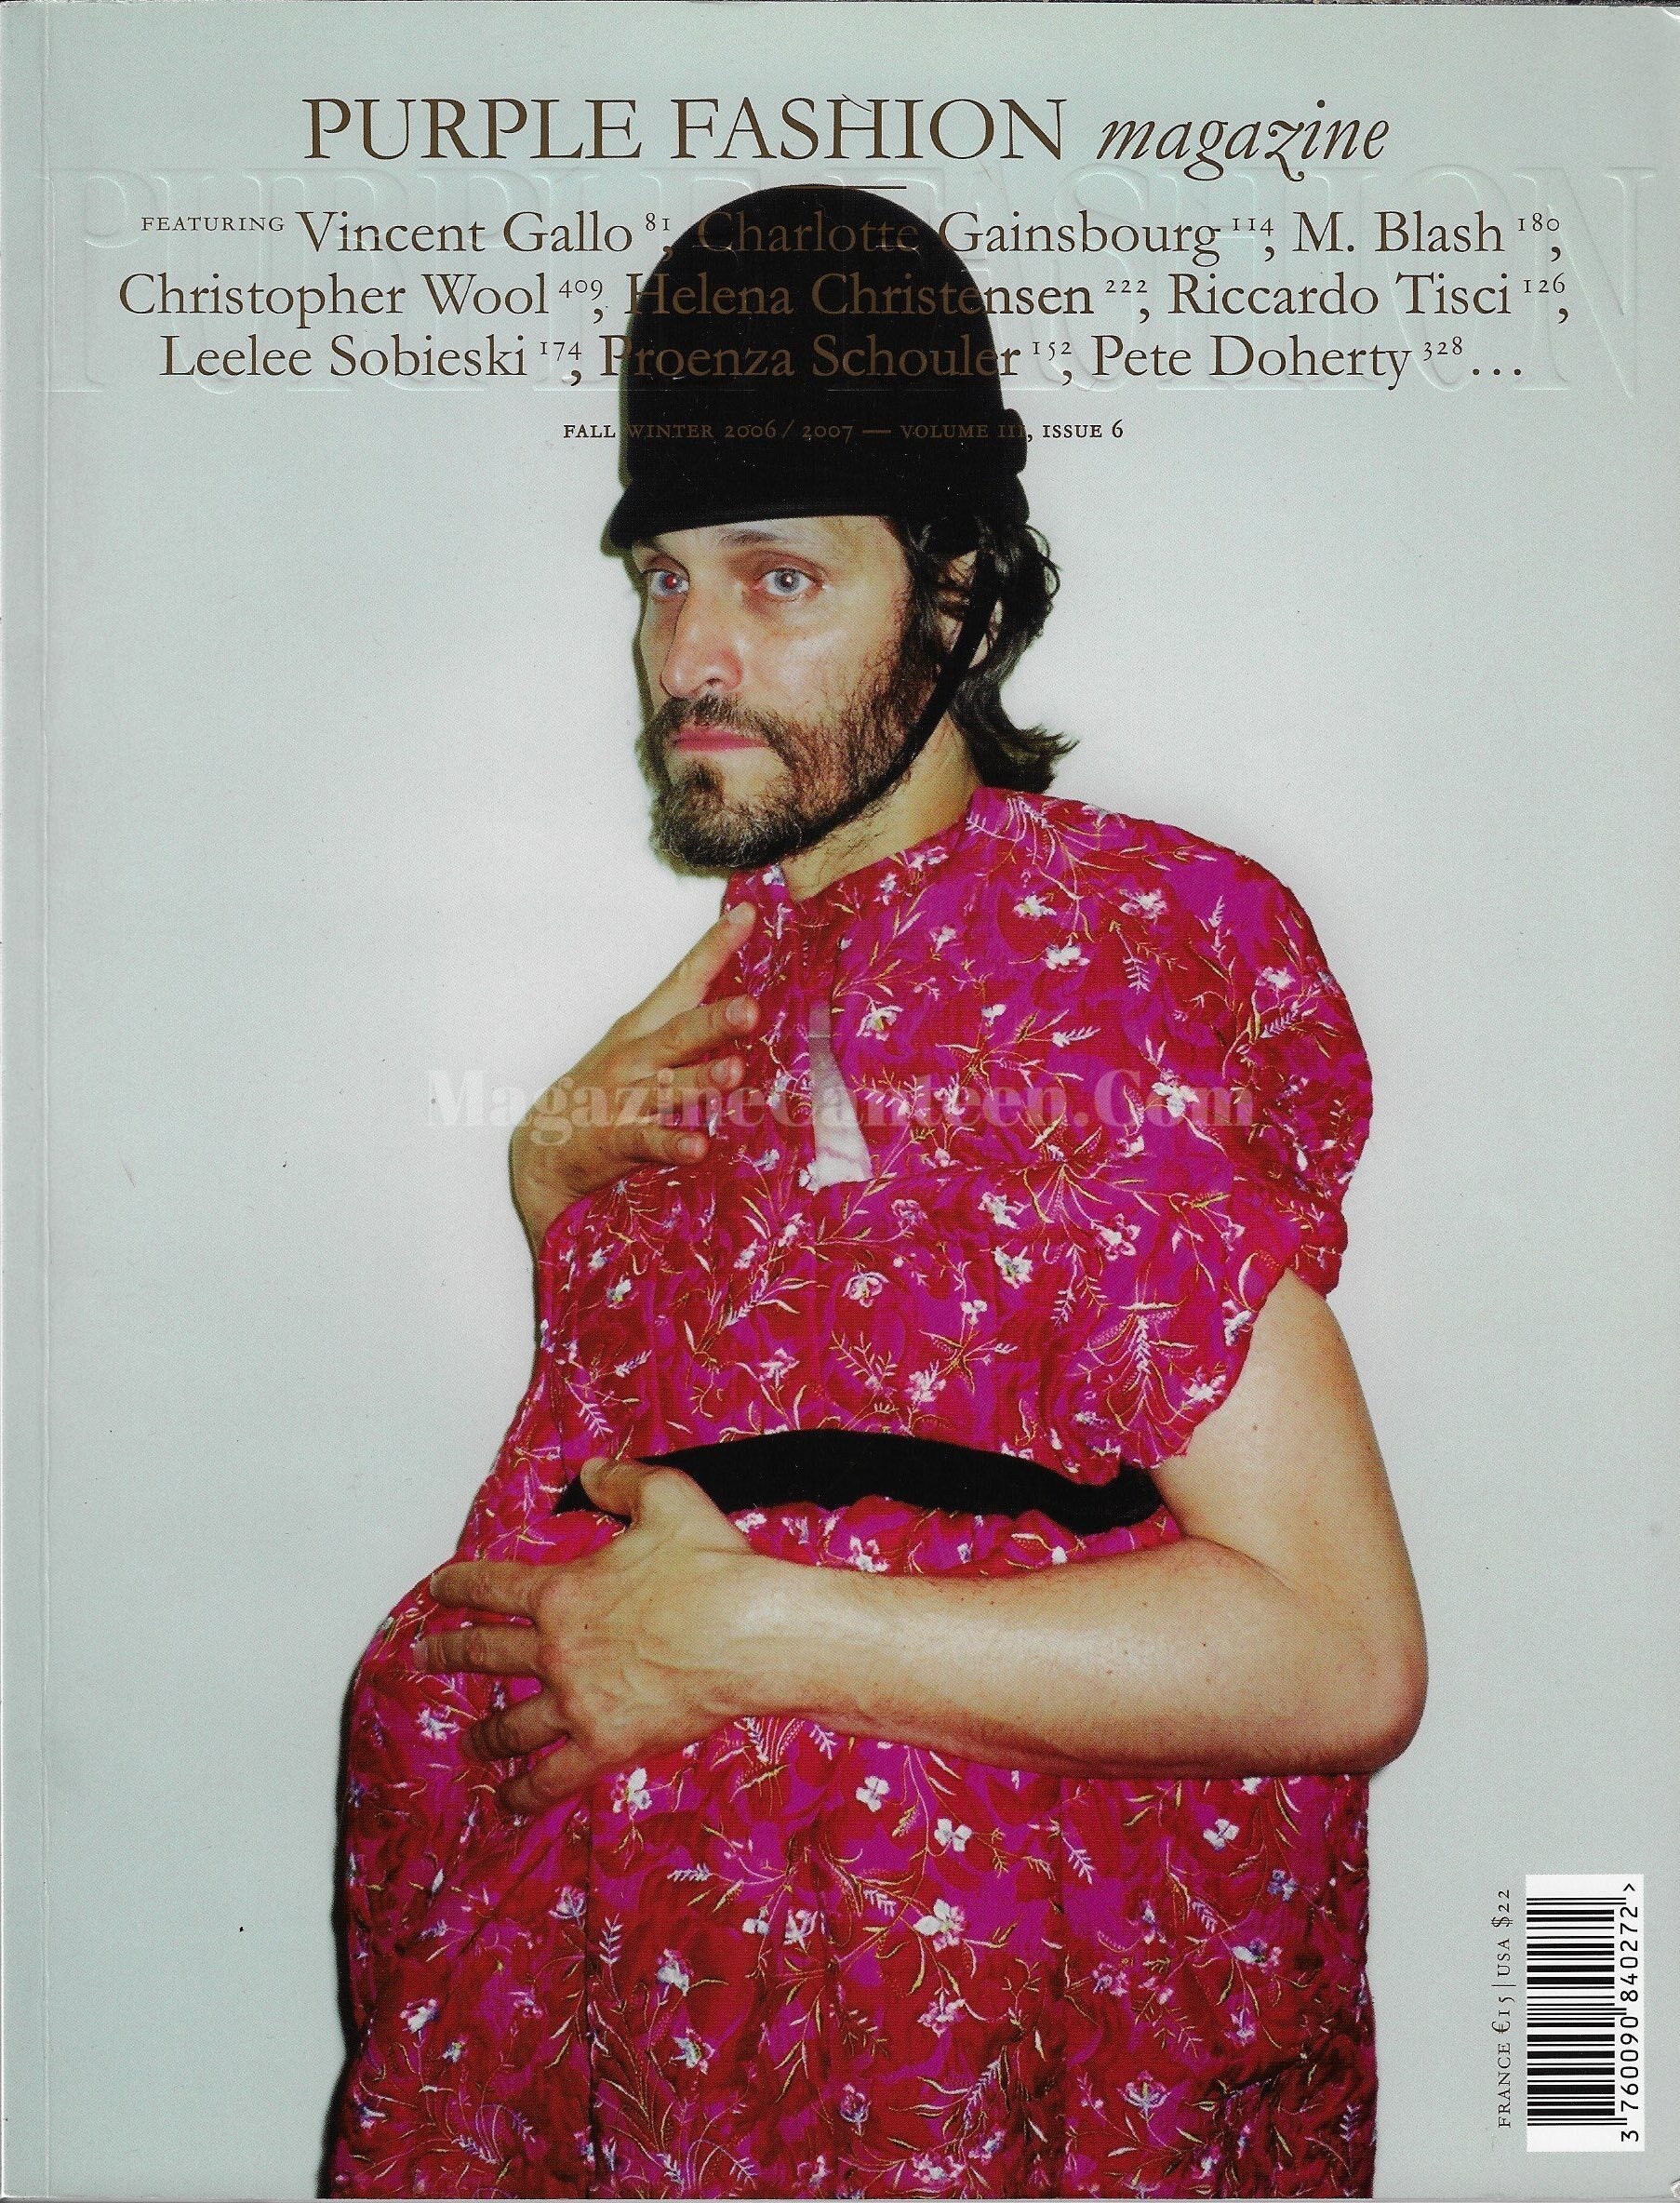 Purple Fashion Magazine 6 - Vincent Gallo terry richardson